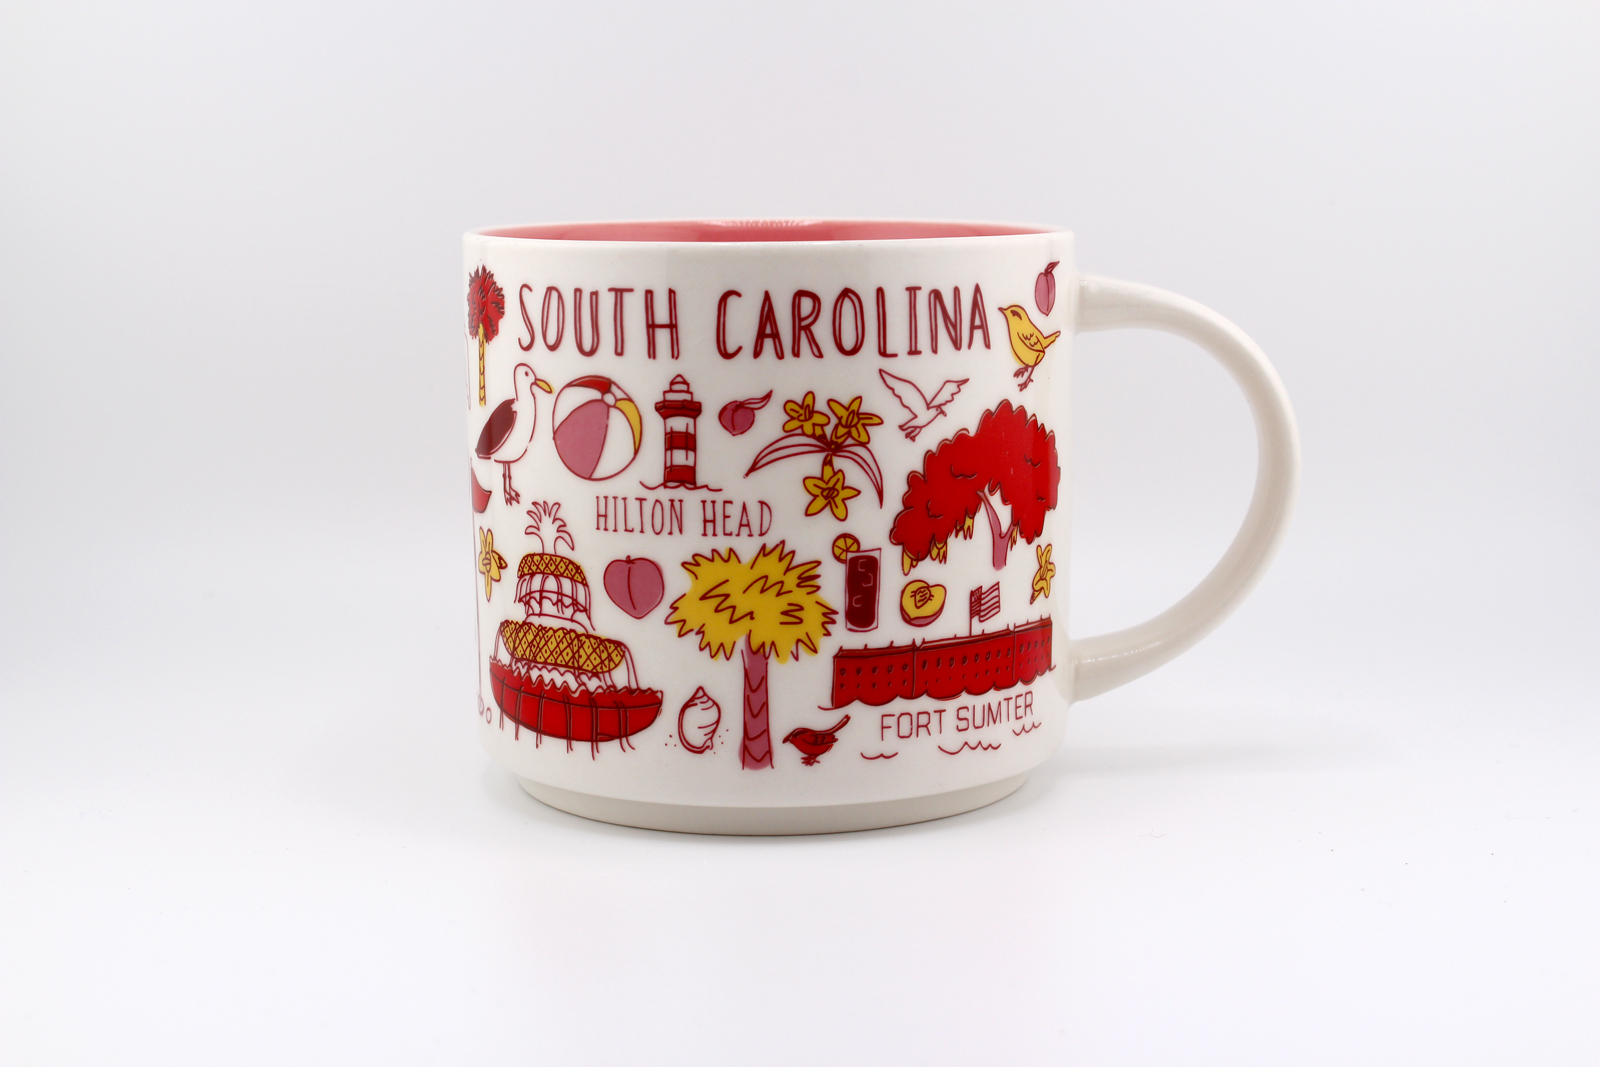 South Carolina Mug: Starbucks Been There Series